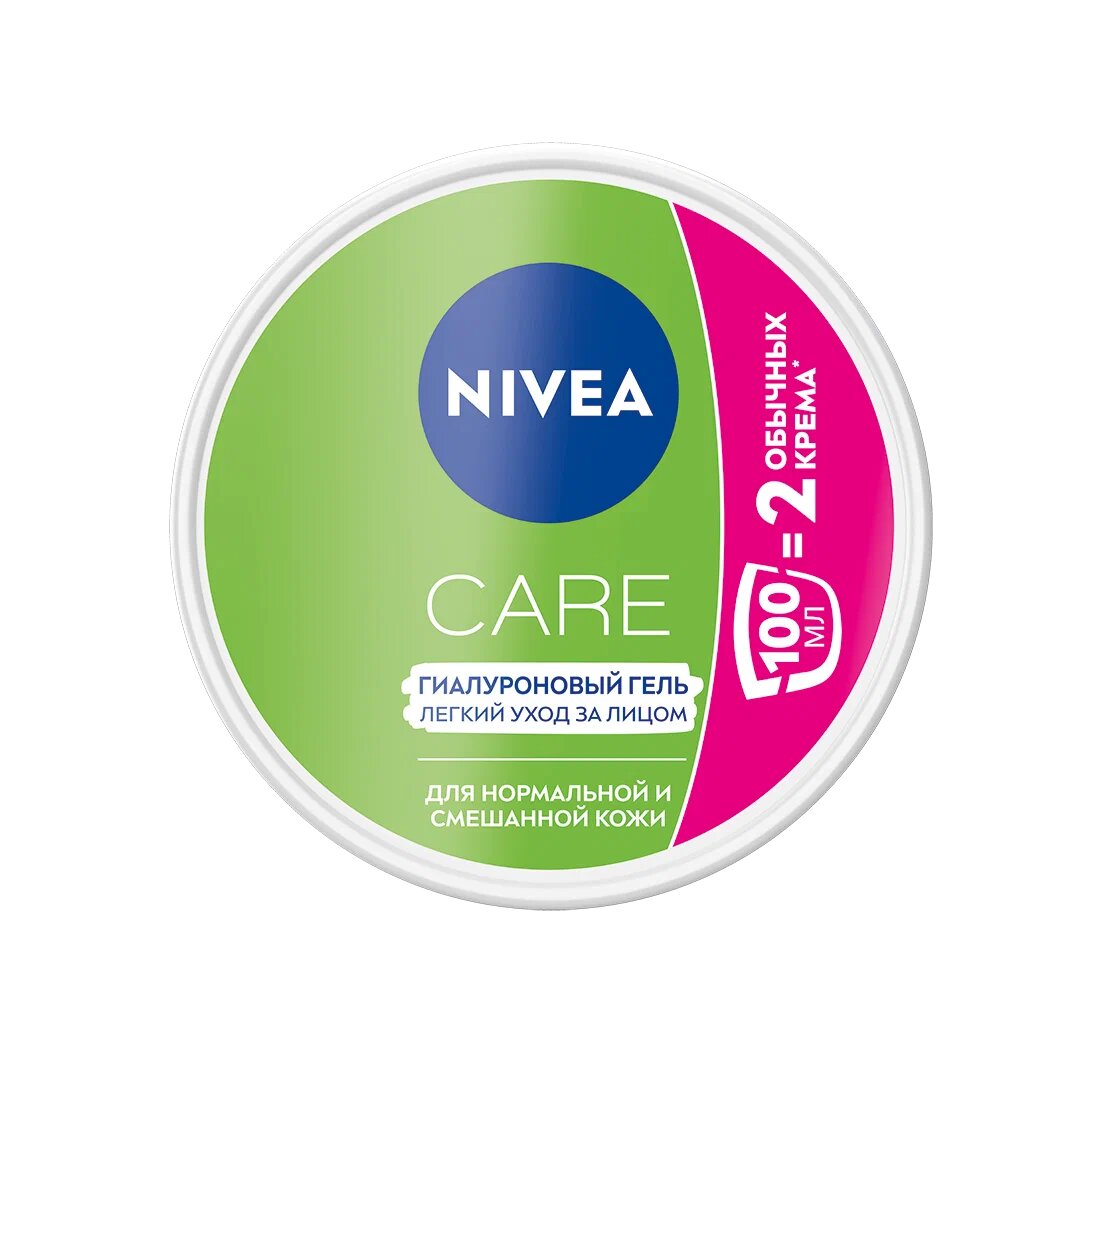 Nivea Care Увлажняющий гиалуроновый гель для лица, 100 мл